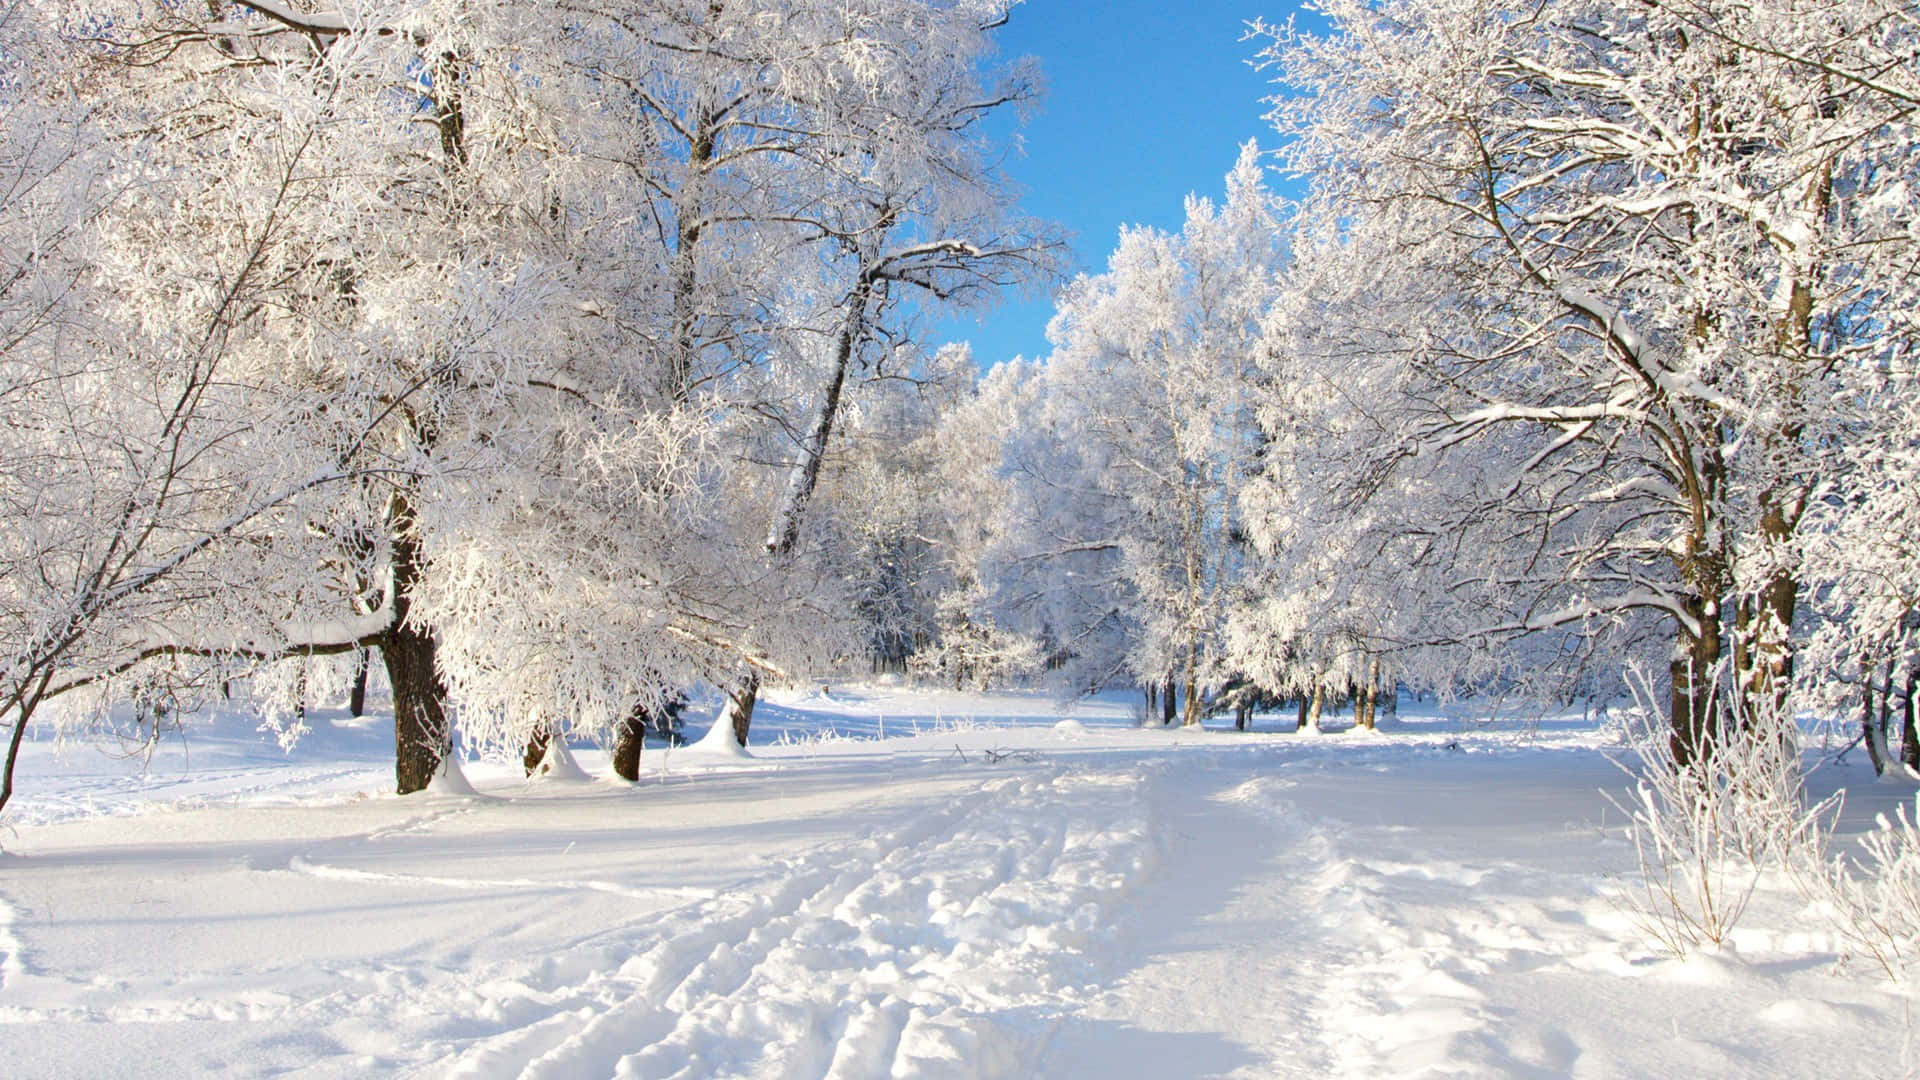 A tranquil winter scene of fresh snowfall Wallpaper